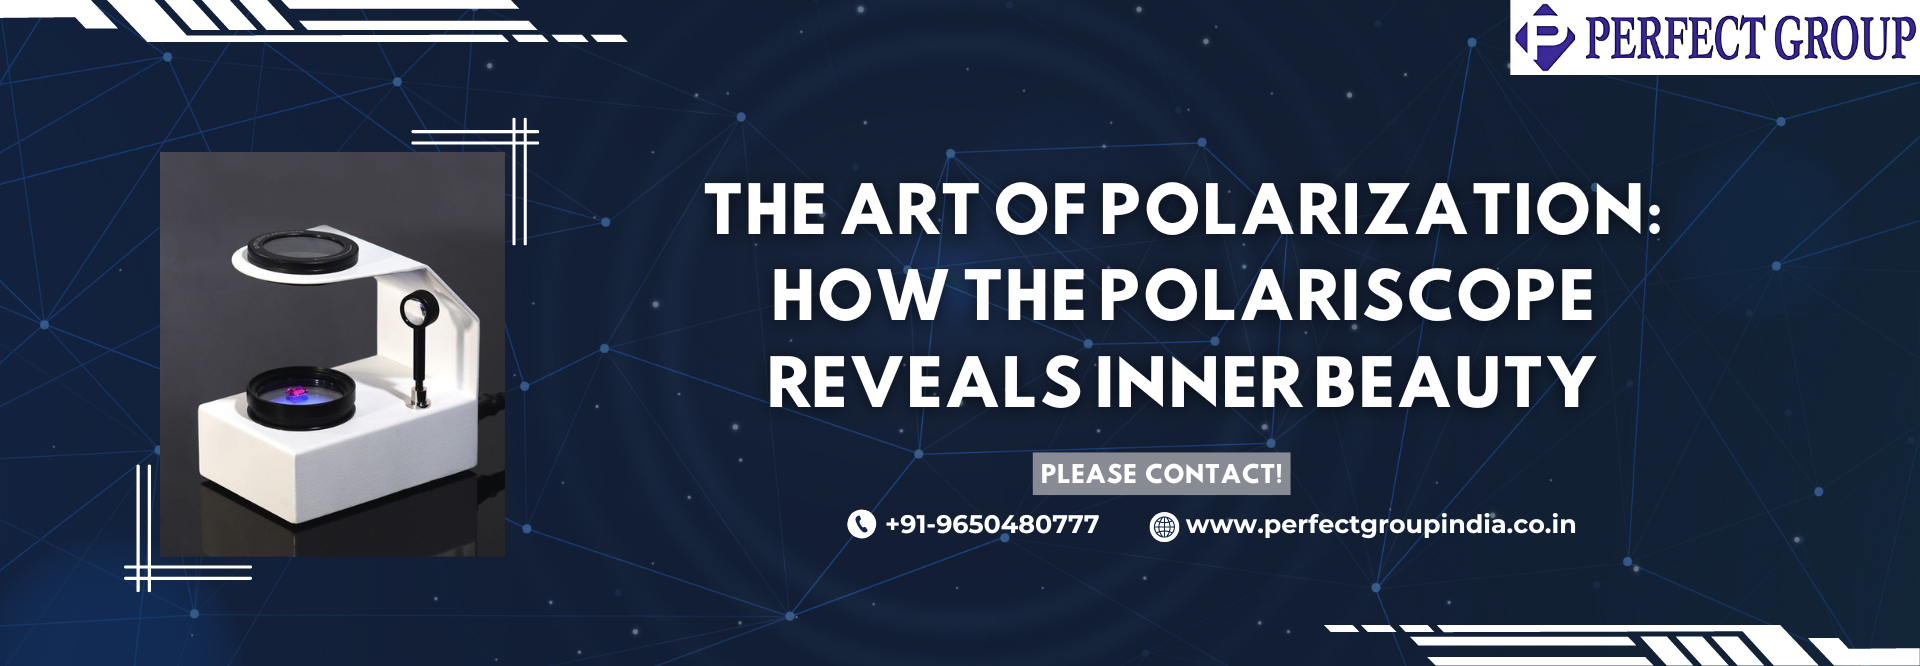 The Art Of Polarization: How The Polariscope Reveals Inner Beauty